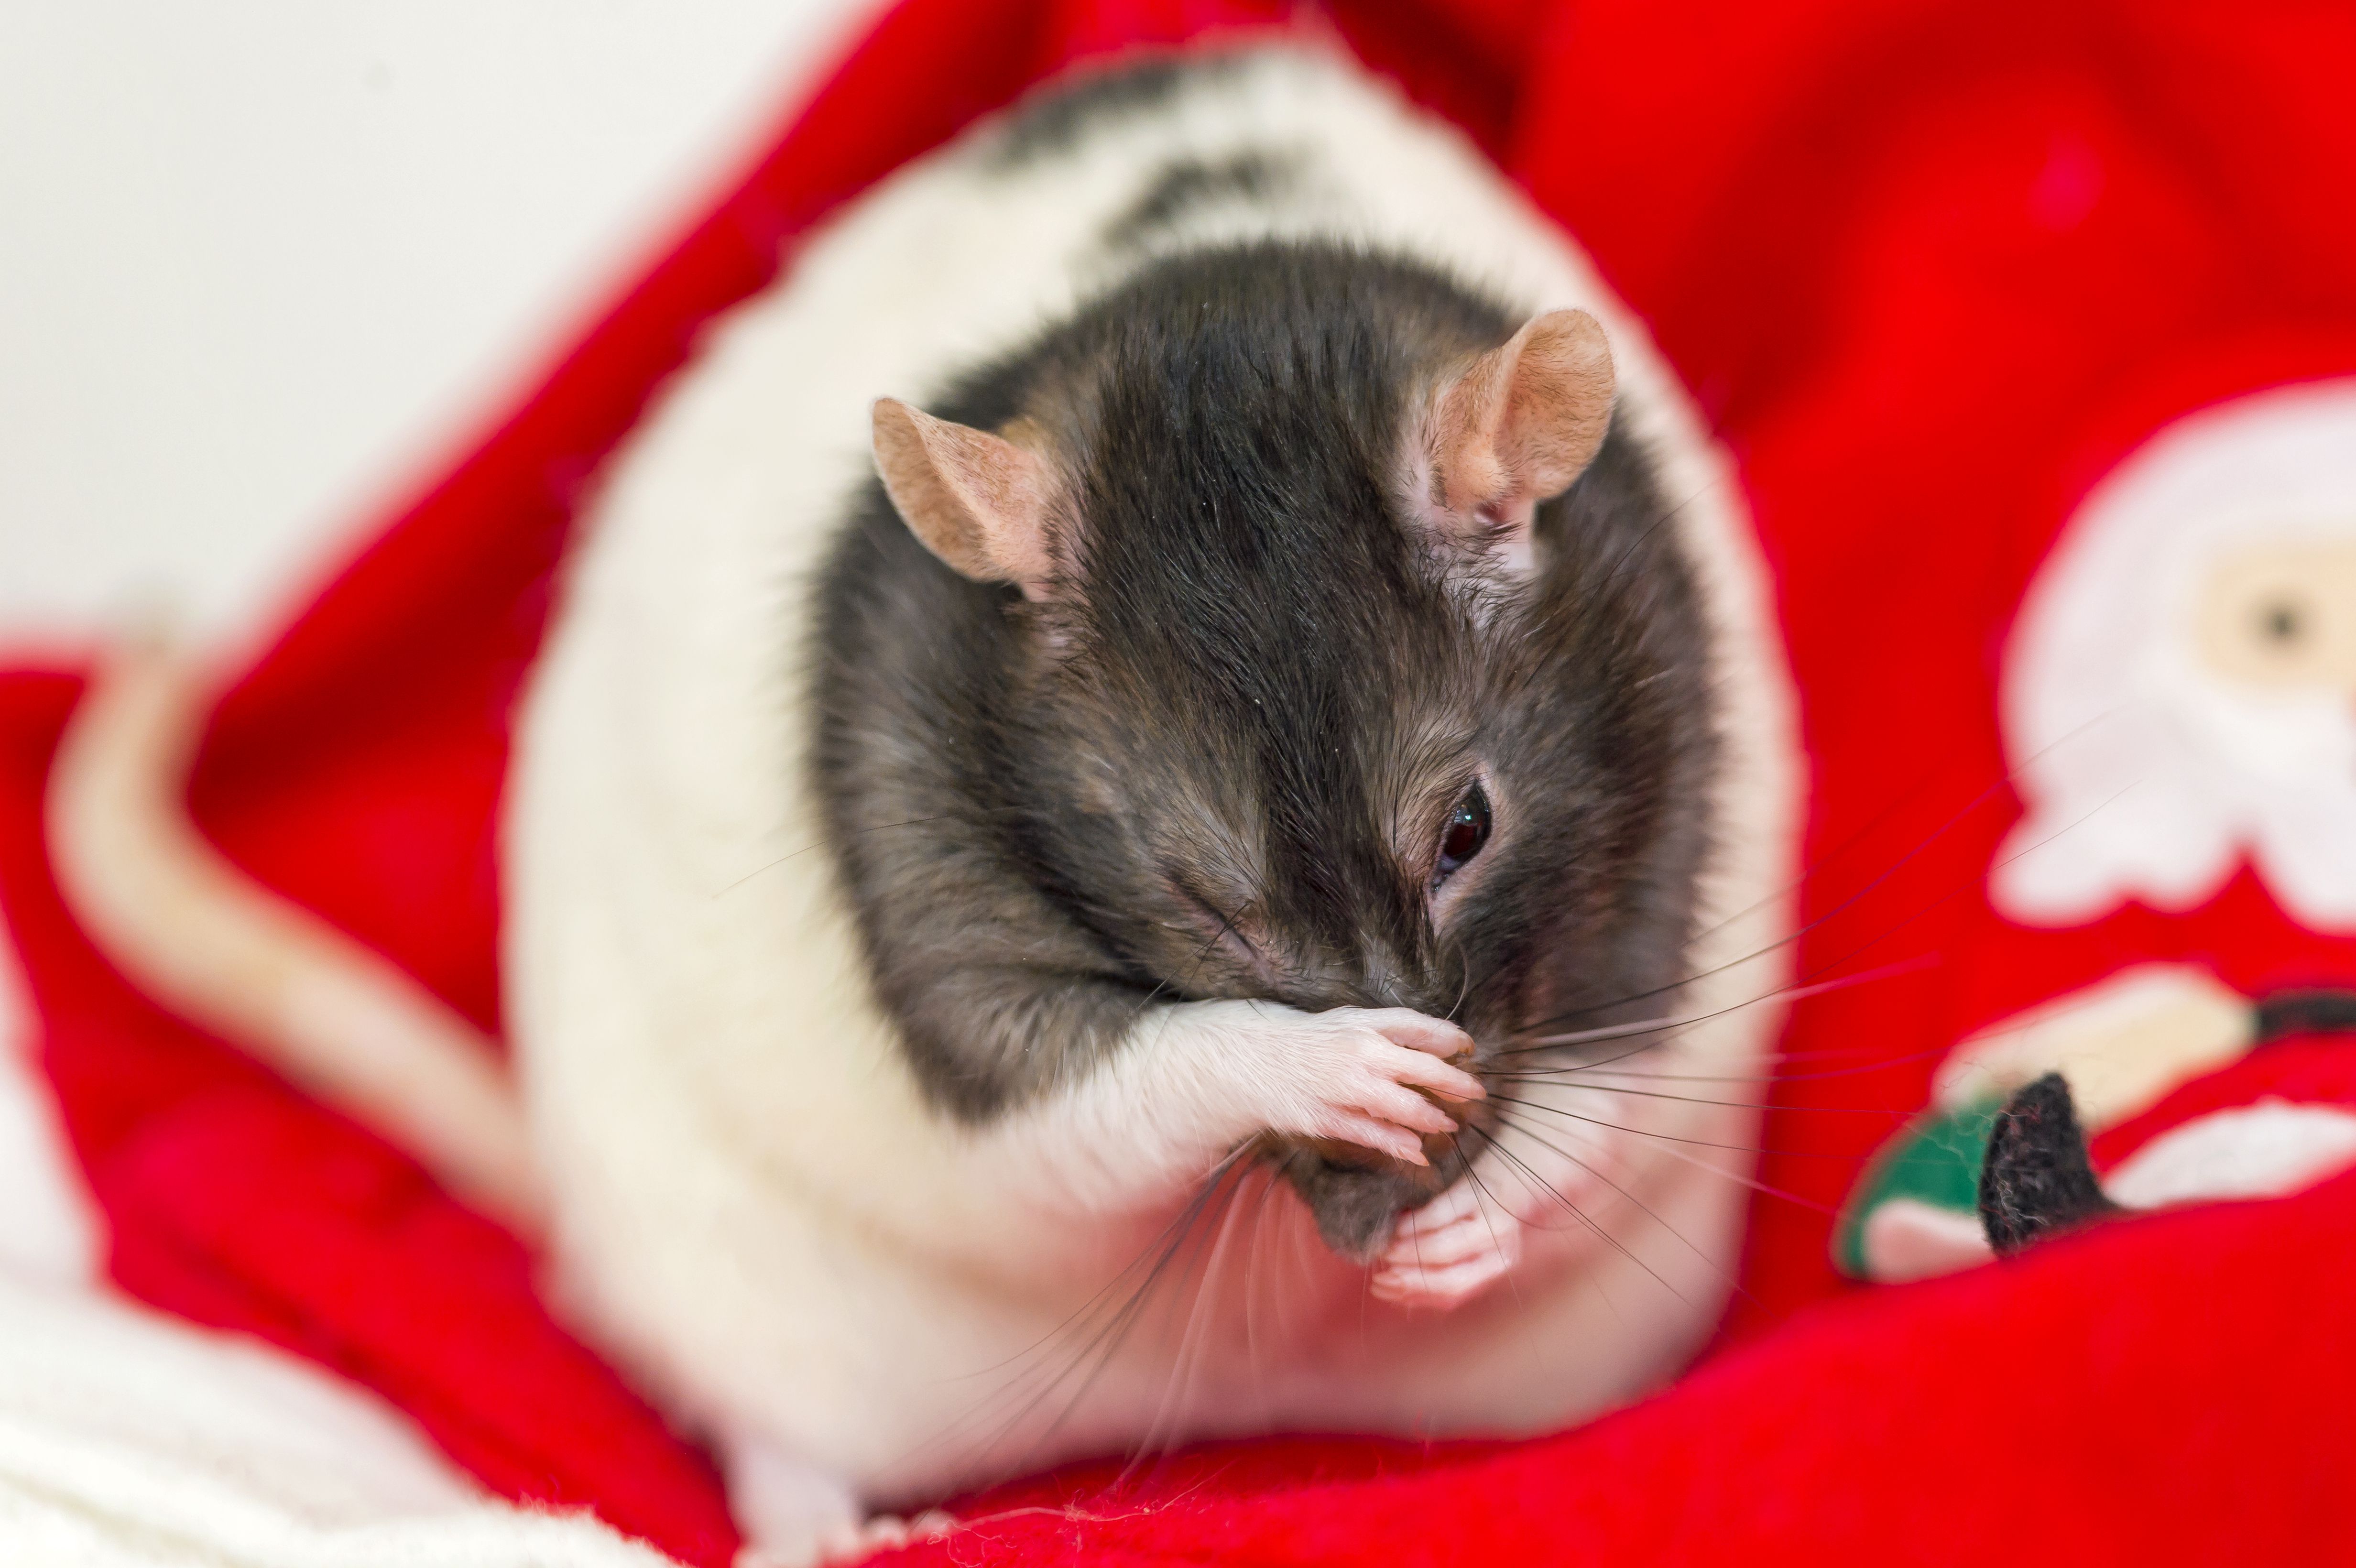 Pet rat grooming on the Santa hat